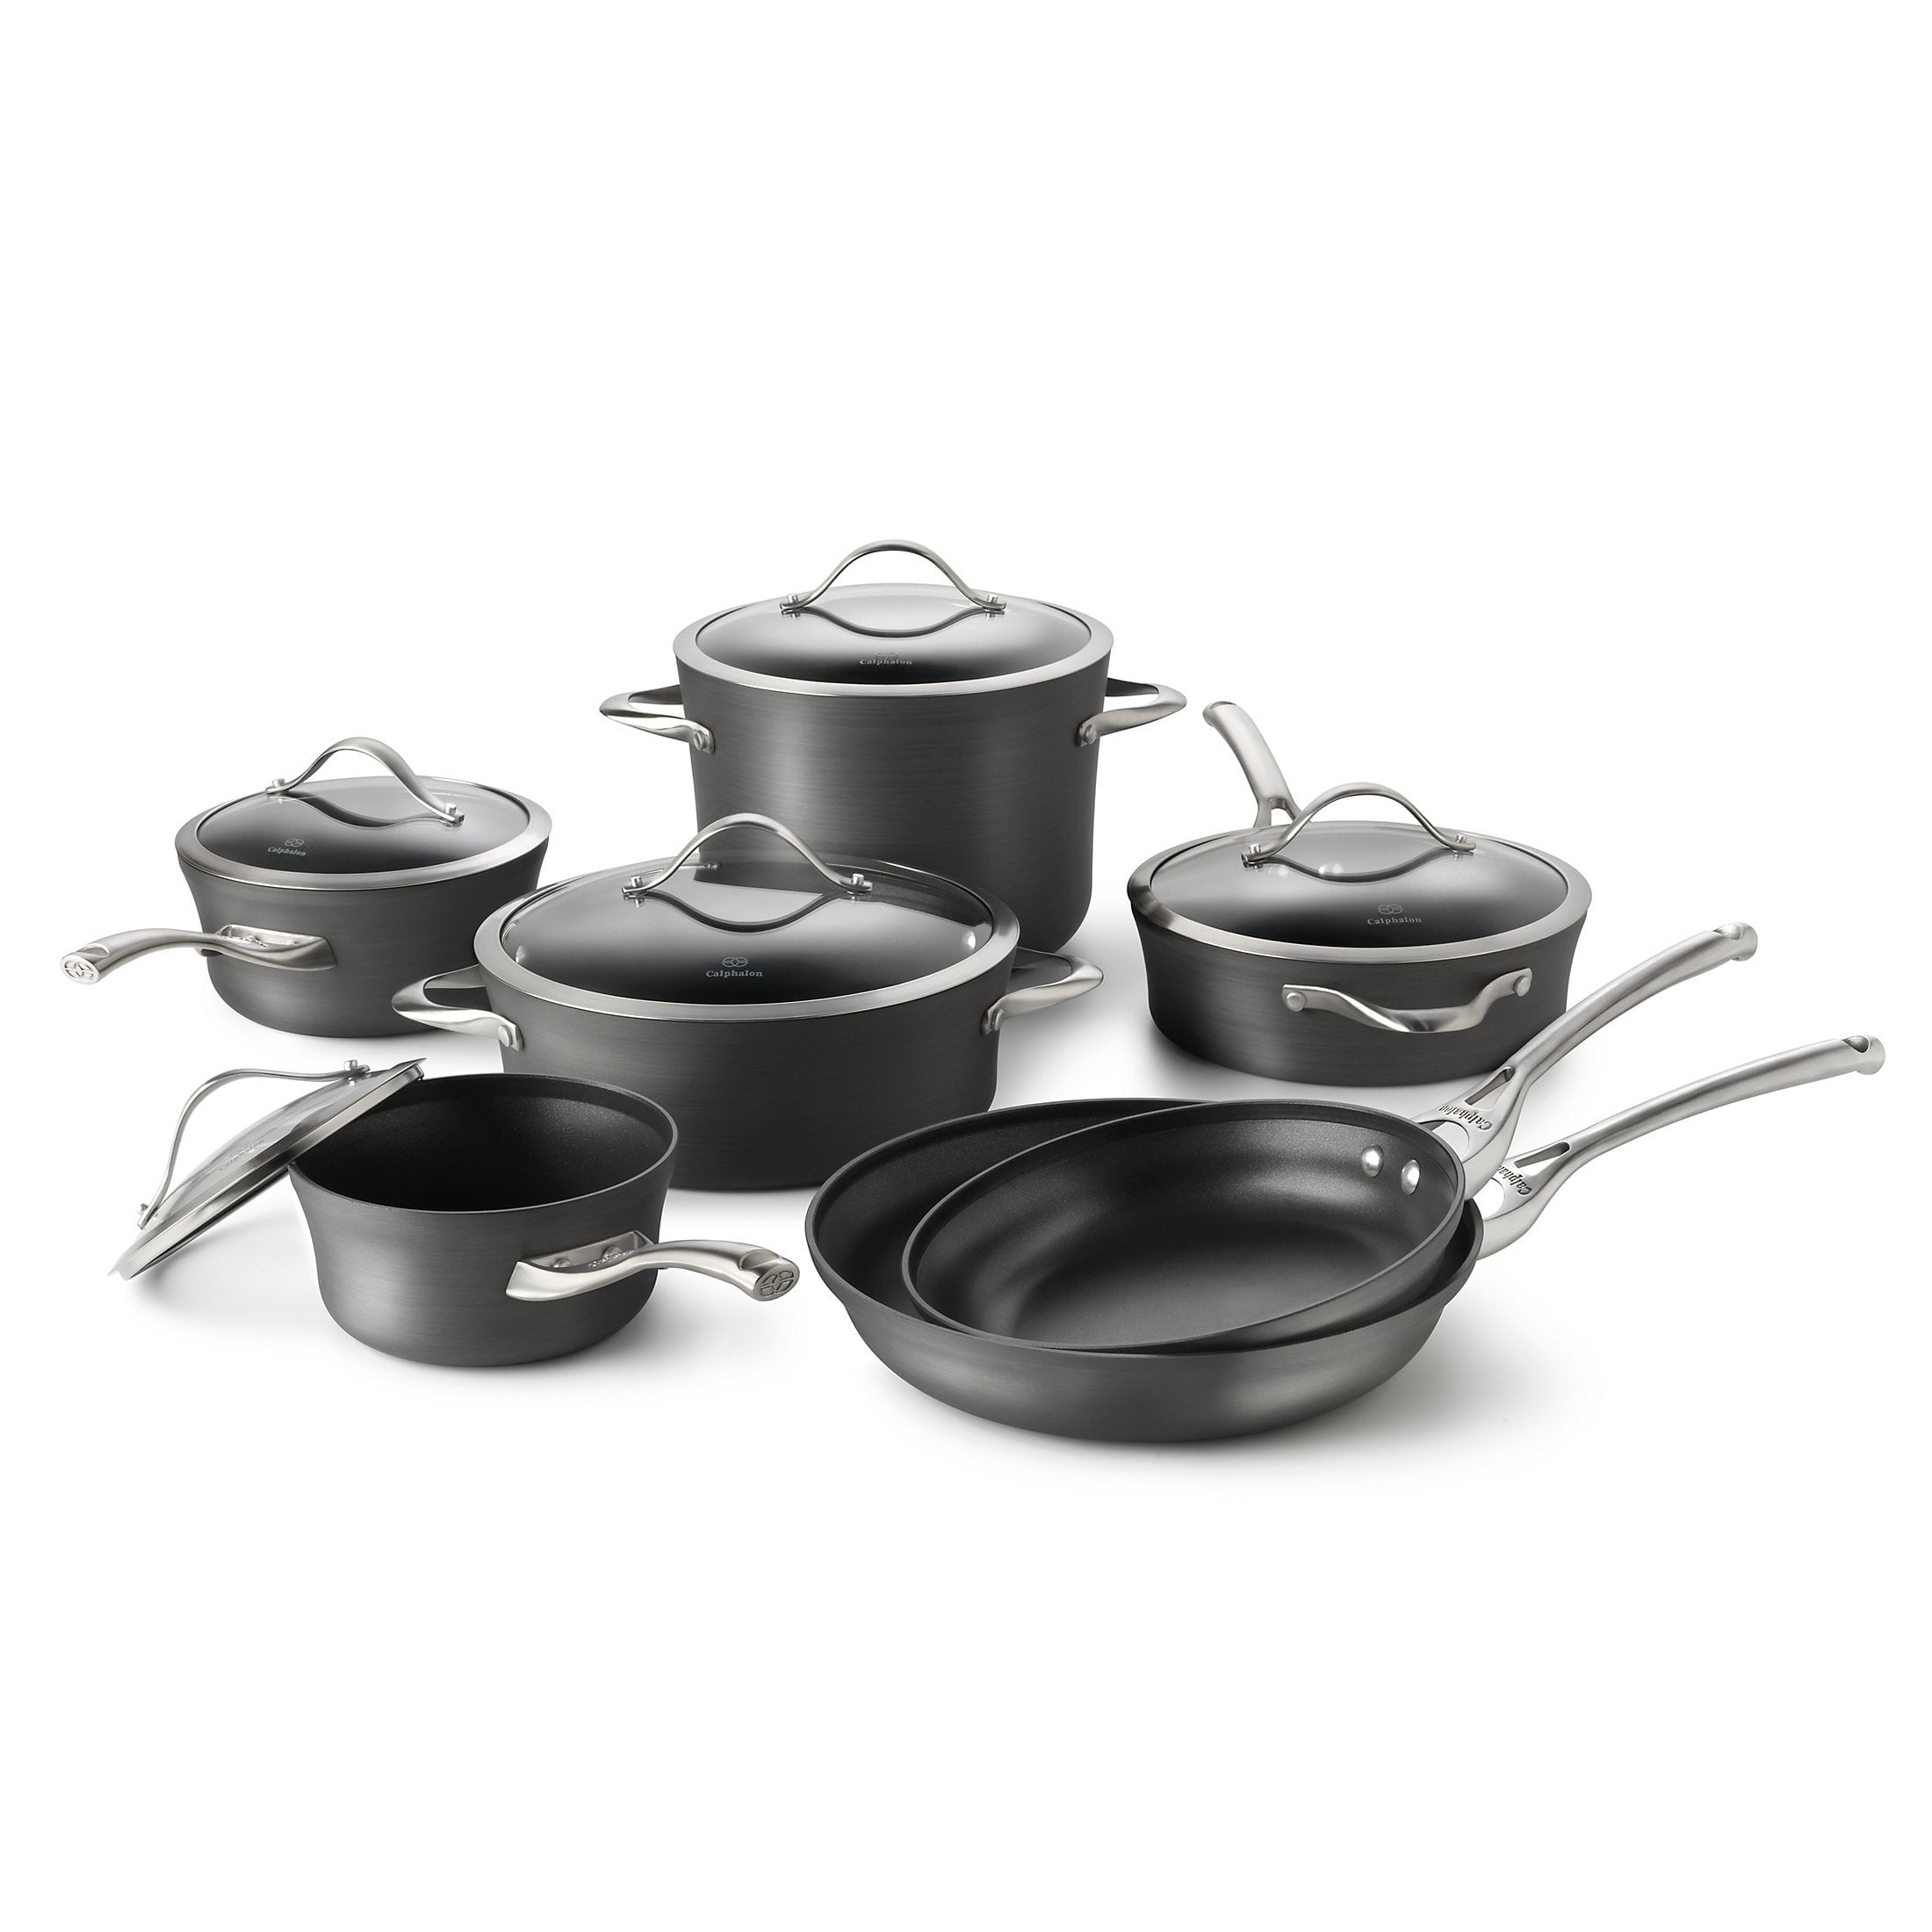  Calphalon Nonstick Cookware Set, 8 Pc, Black: Home & Kitchen